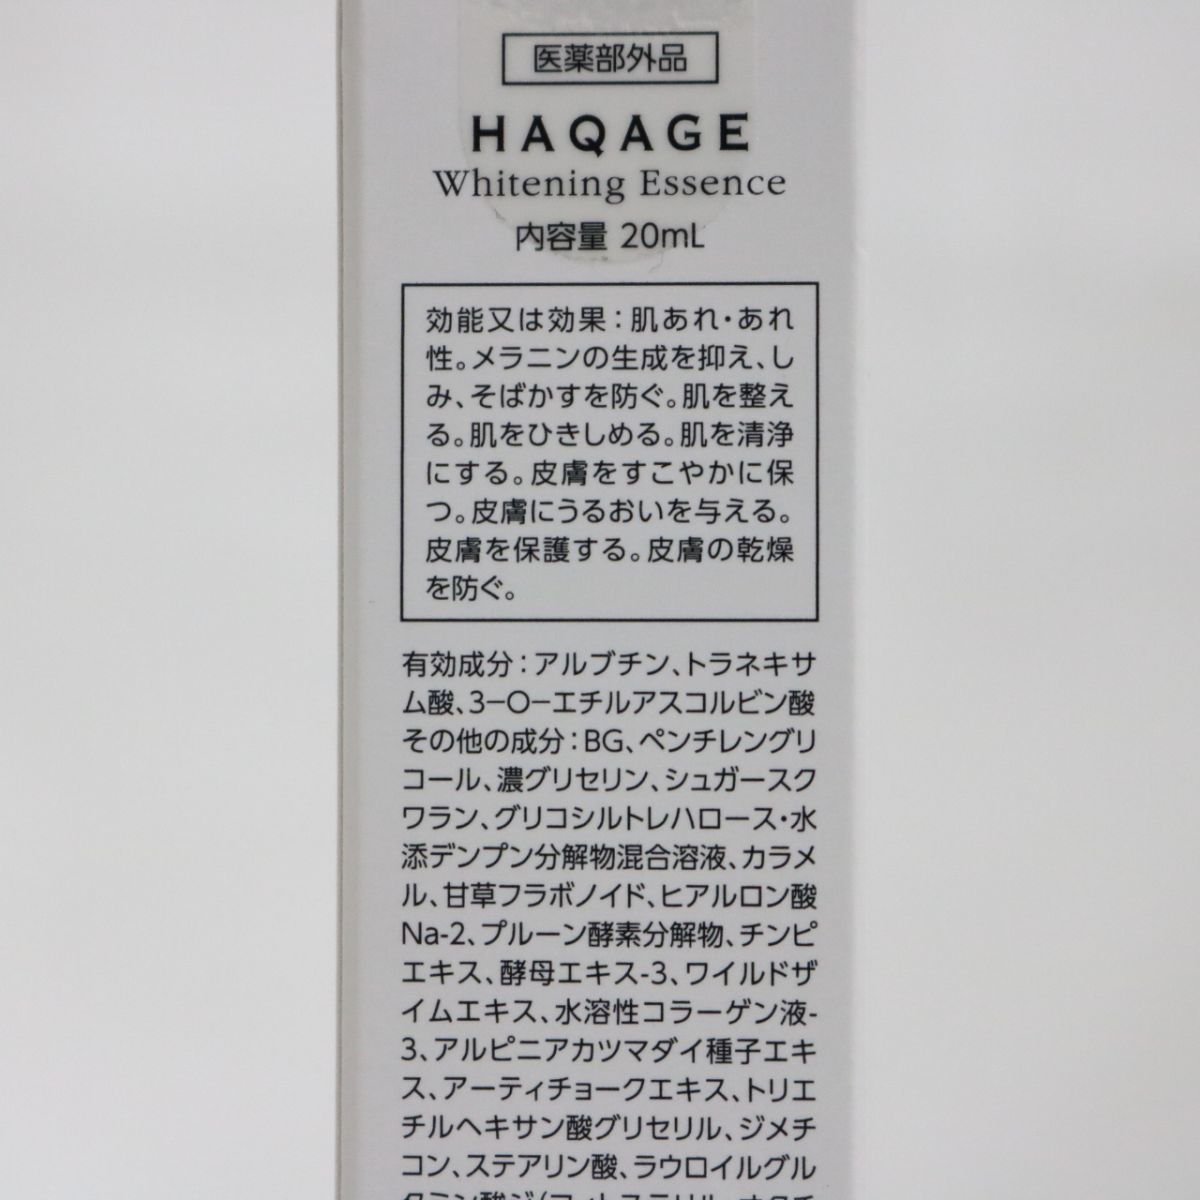 * новый товар 2 шт. комплект HAQAGE Whitening Essence Haku a-ju лекарство для отбеливание essence 20mL ( 0719-n2 )